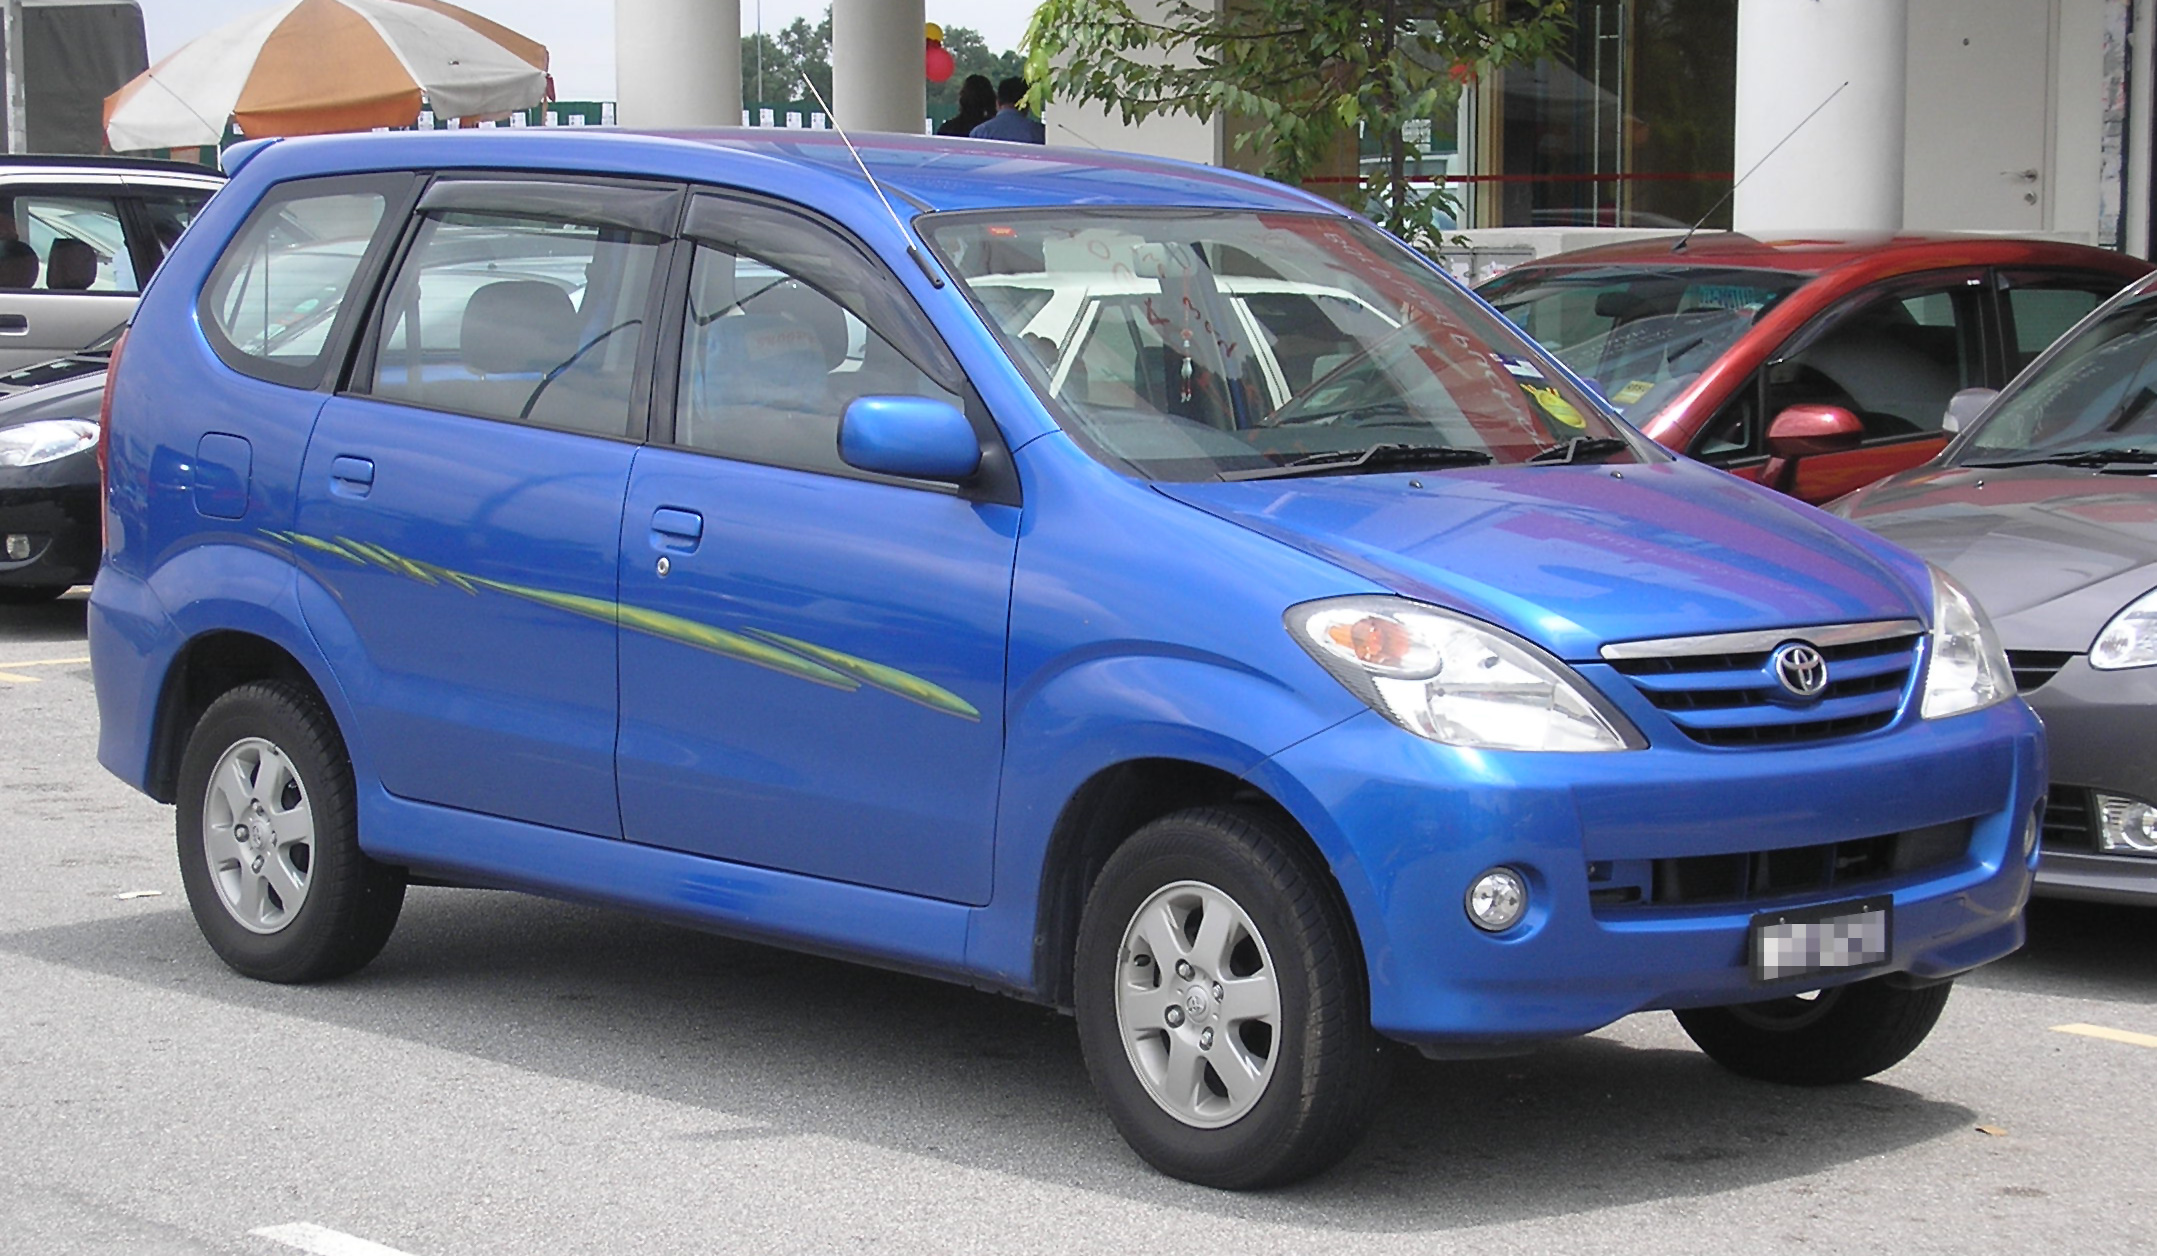 File:Toyota Avanza (first generation) (front), Serdang.jpg